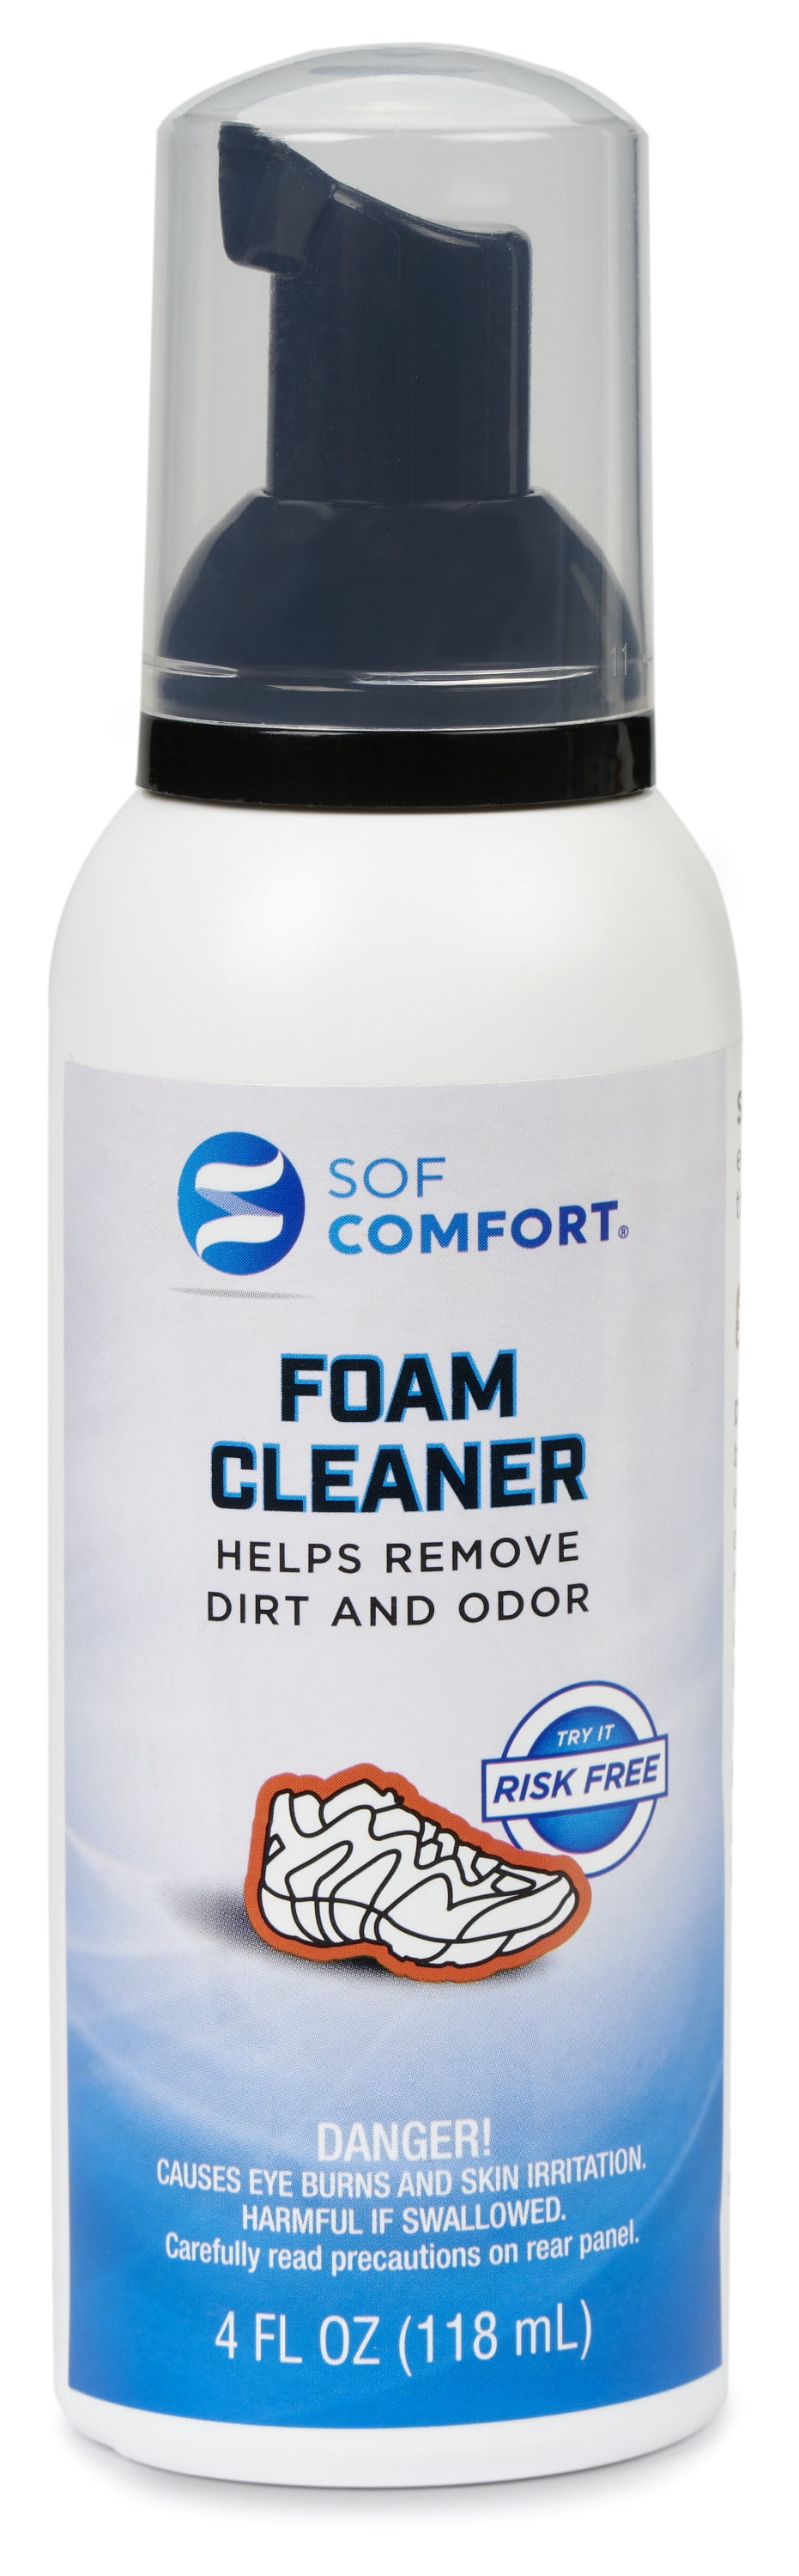 Sof Comfort Foaming Shoe Cleaner Kit, 4 oz, Size: 4 fl oz